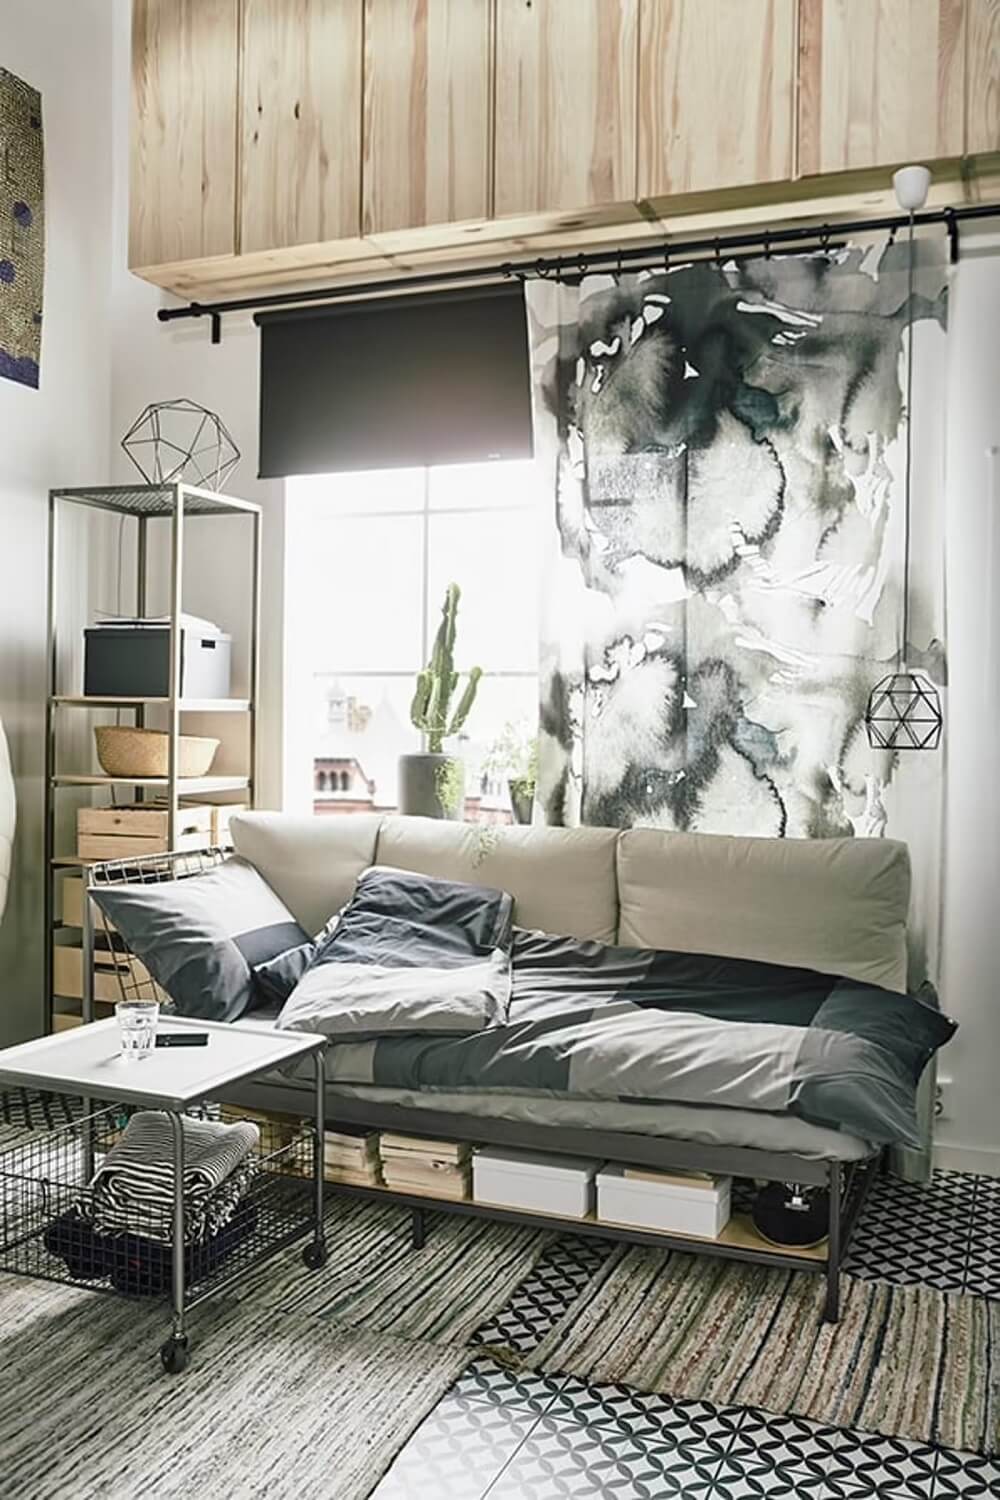 ikea-sofa-bed-wall-mounted-ivar-cabinets-nordroom